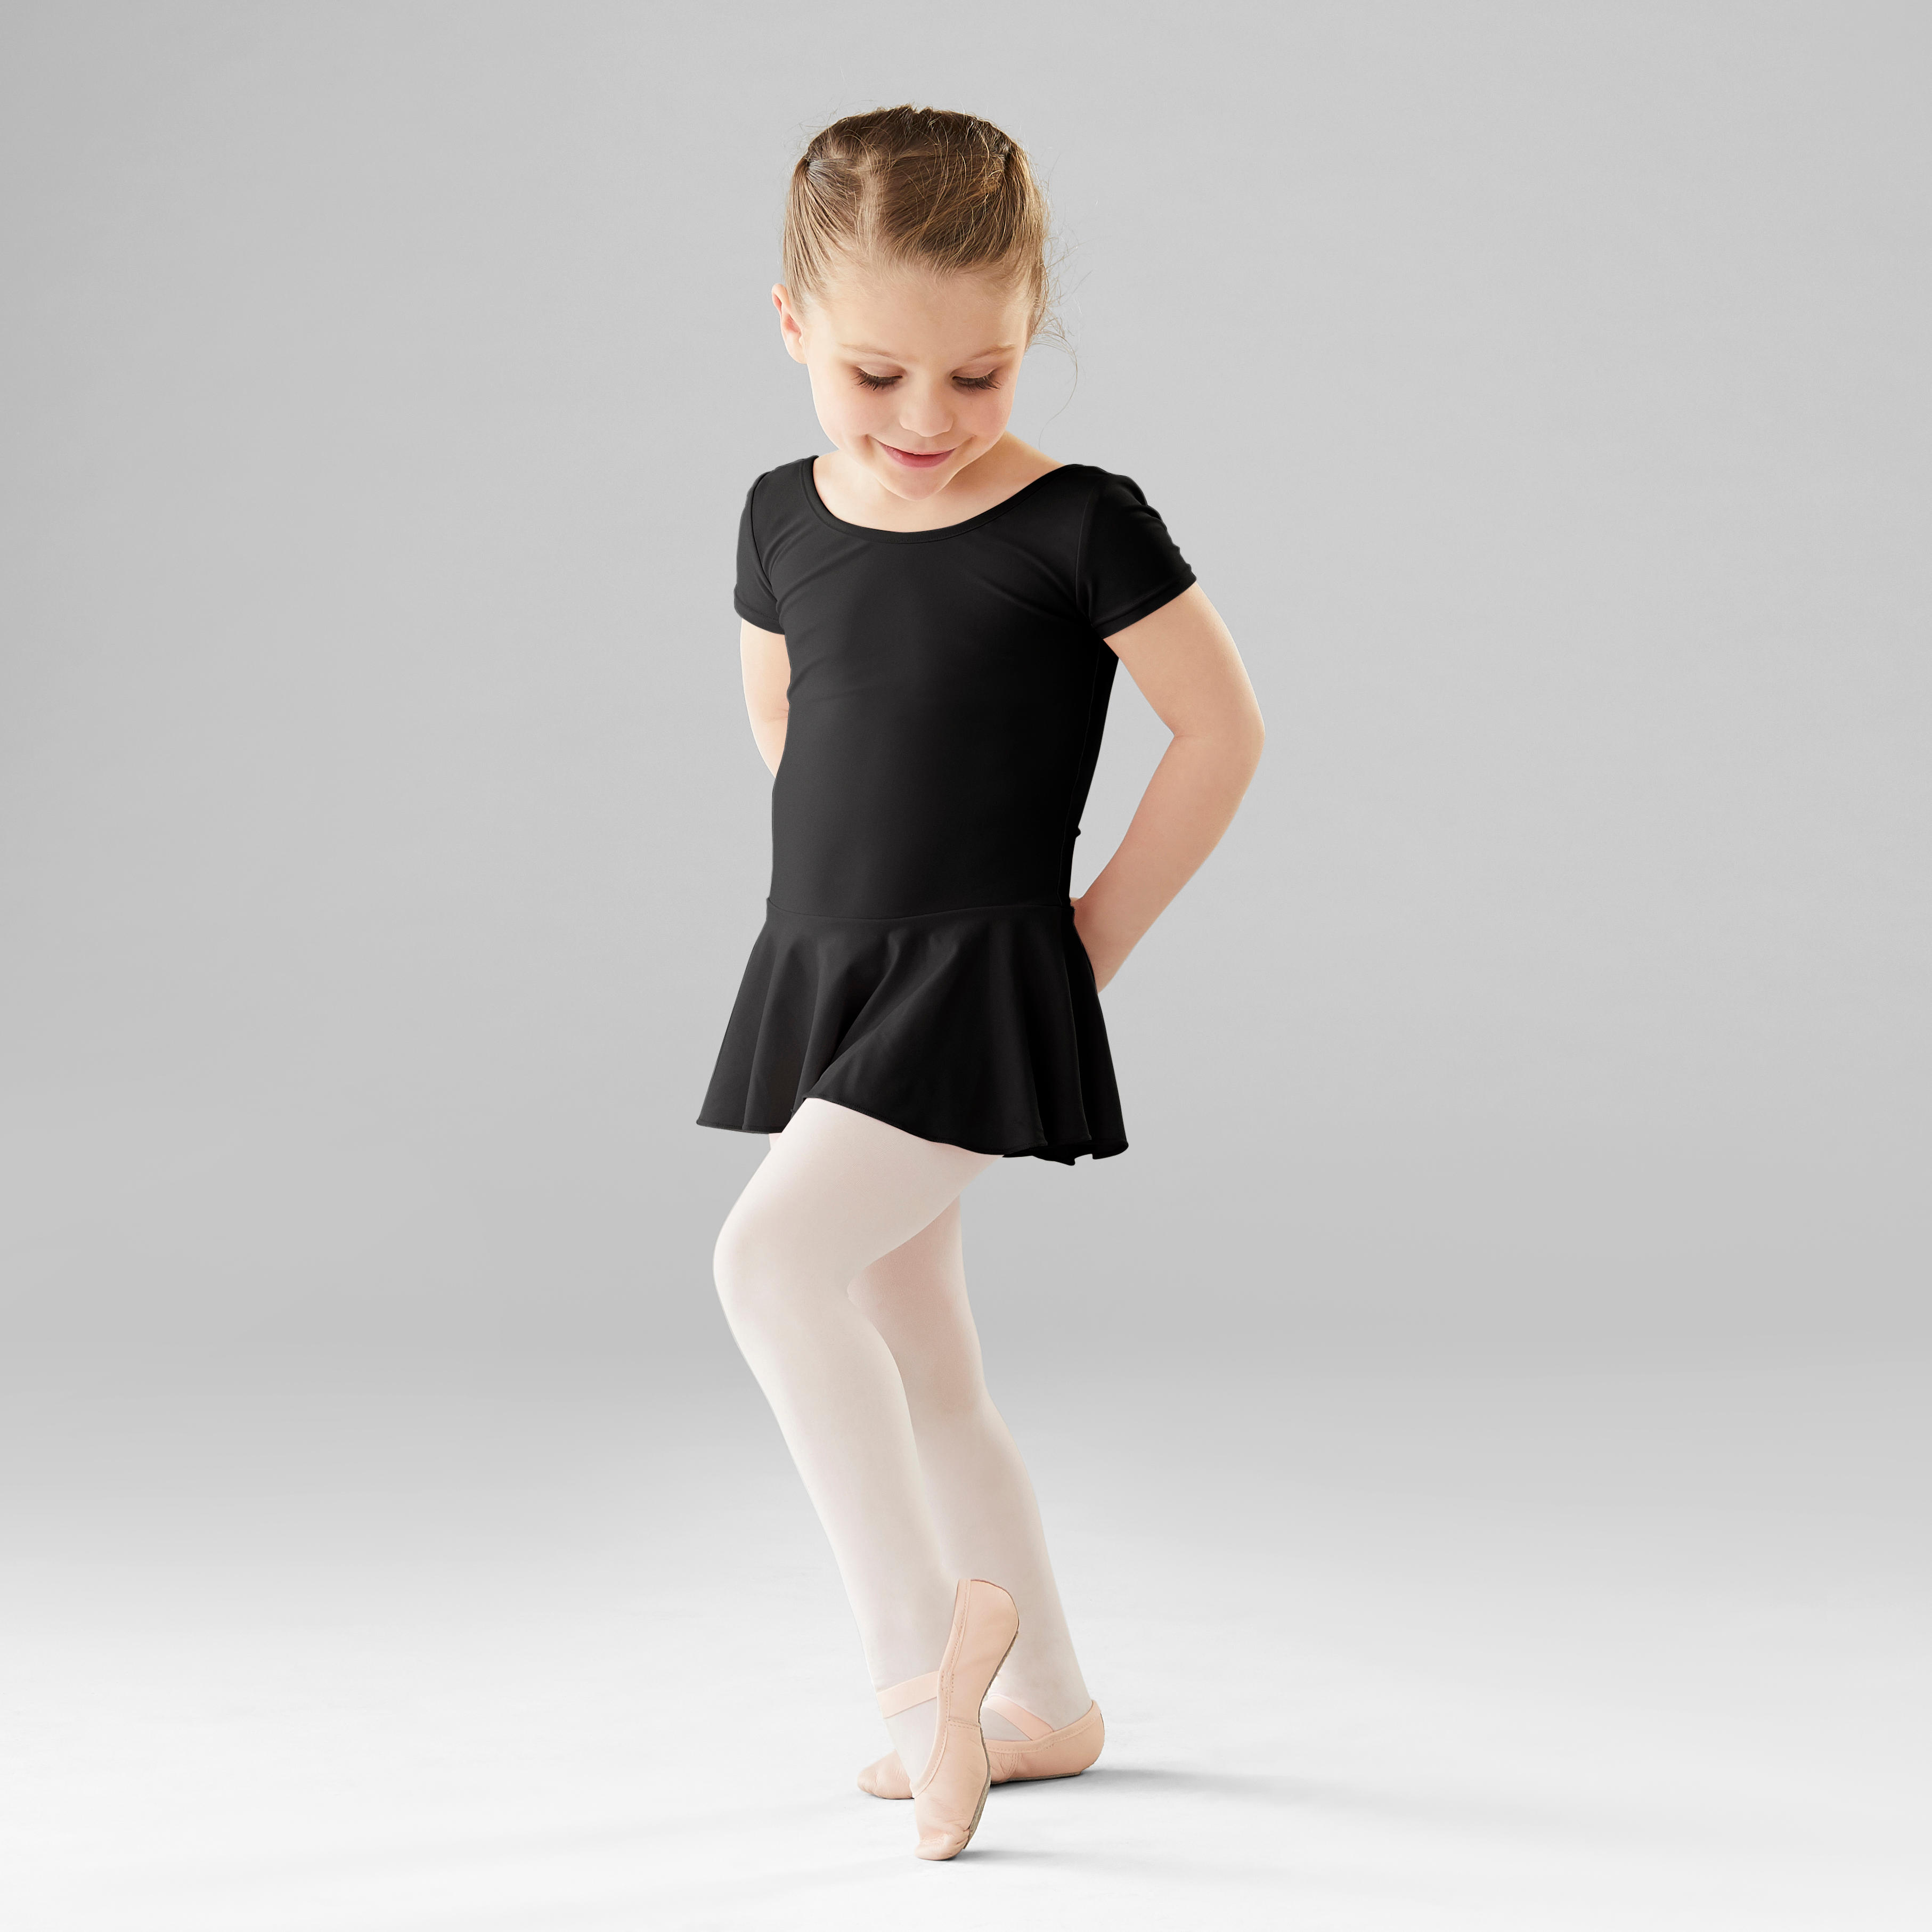 inlzdz Kids Girls Ballet Dance Classic Chiffon Pleated Skirt Pull-On Leotard Tutu Skirt Dancewear Costumes 